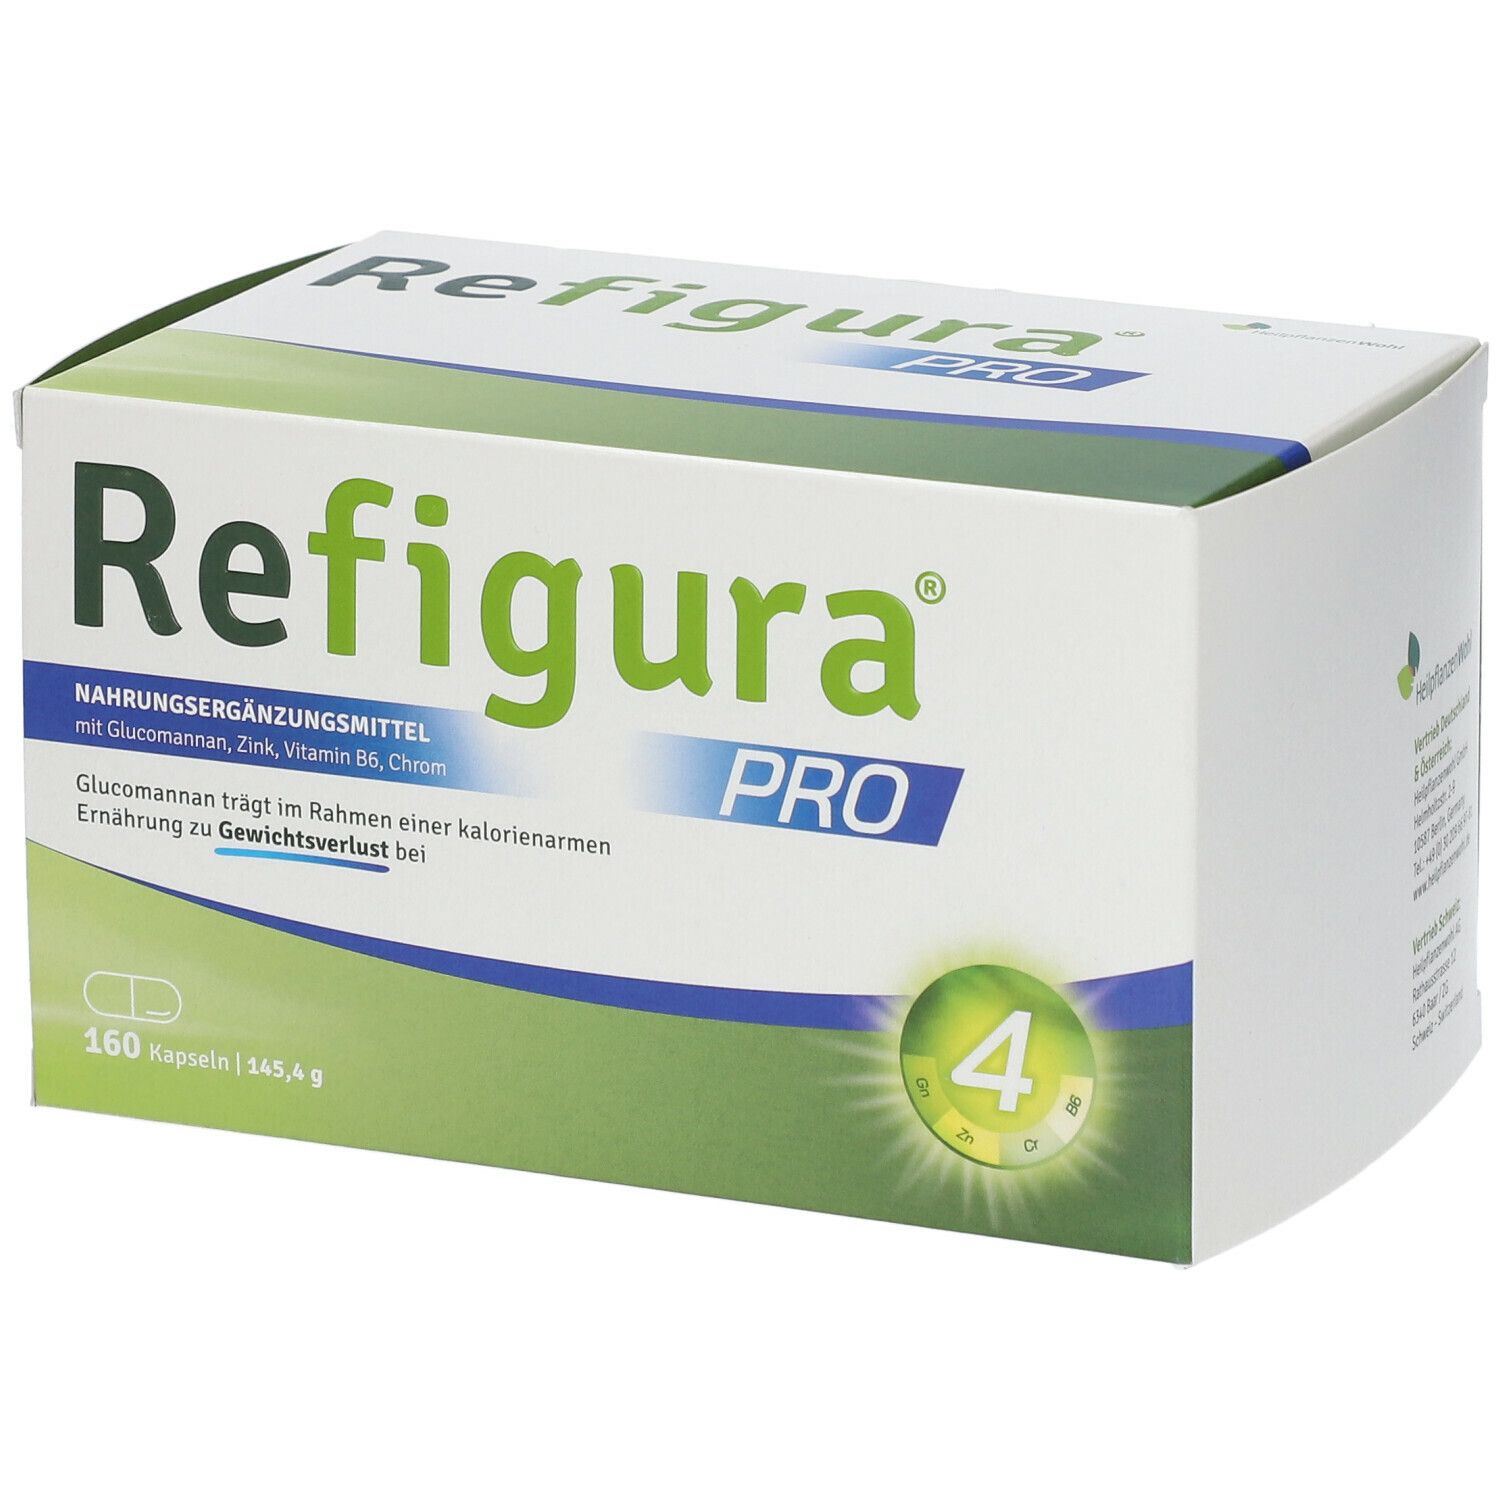 Image of Refigura® Pro